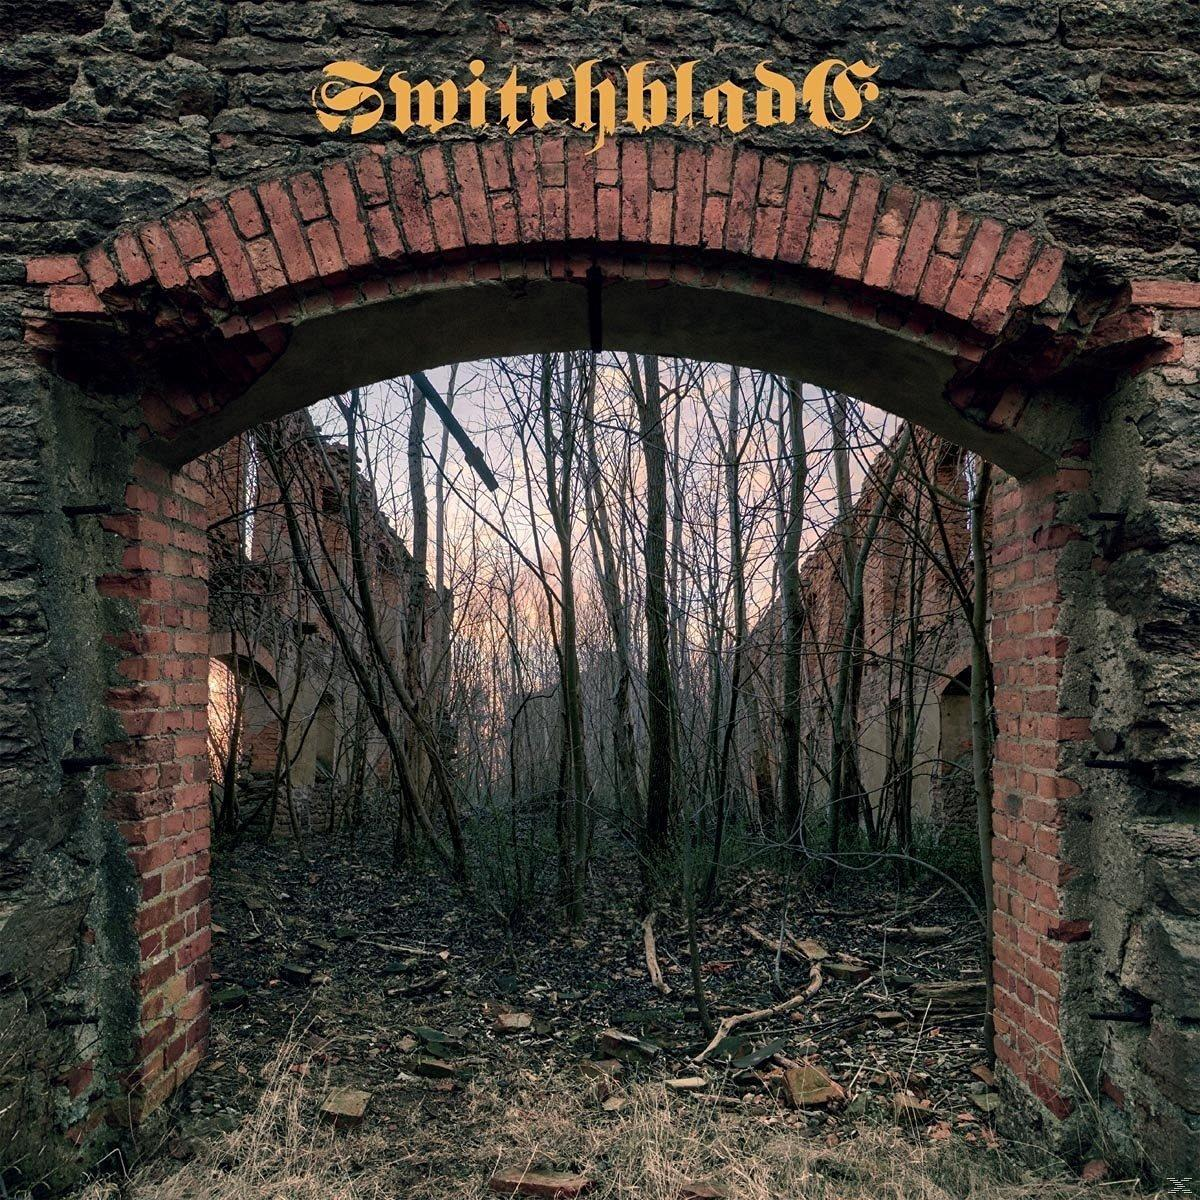 Switchblade - Switchblade (2016) - (CD)